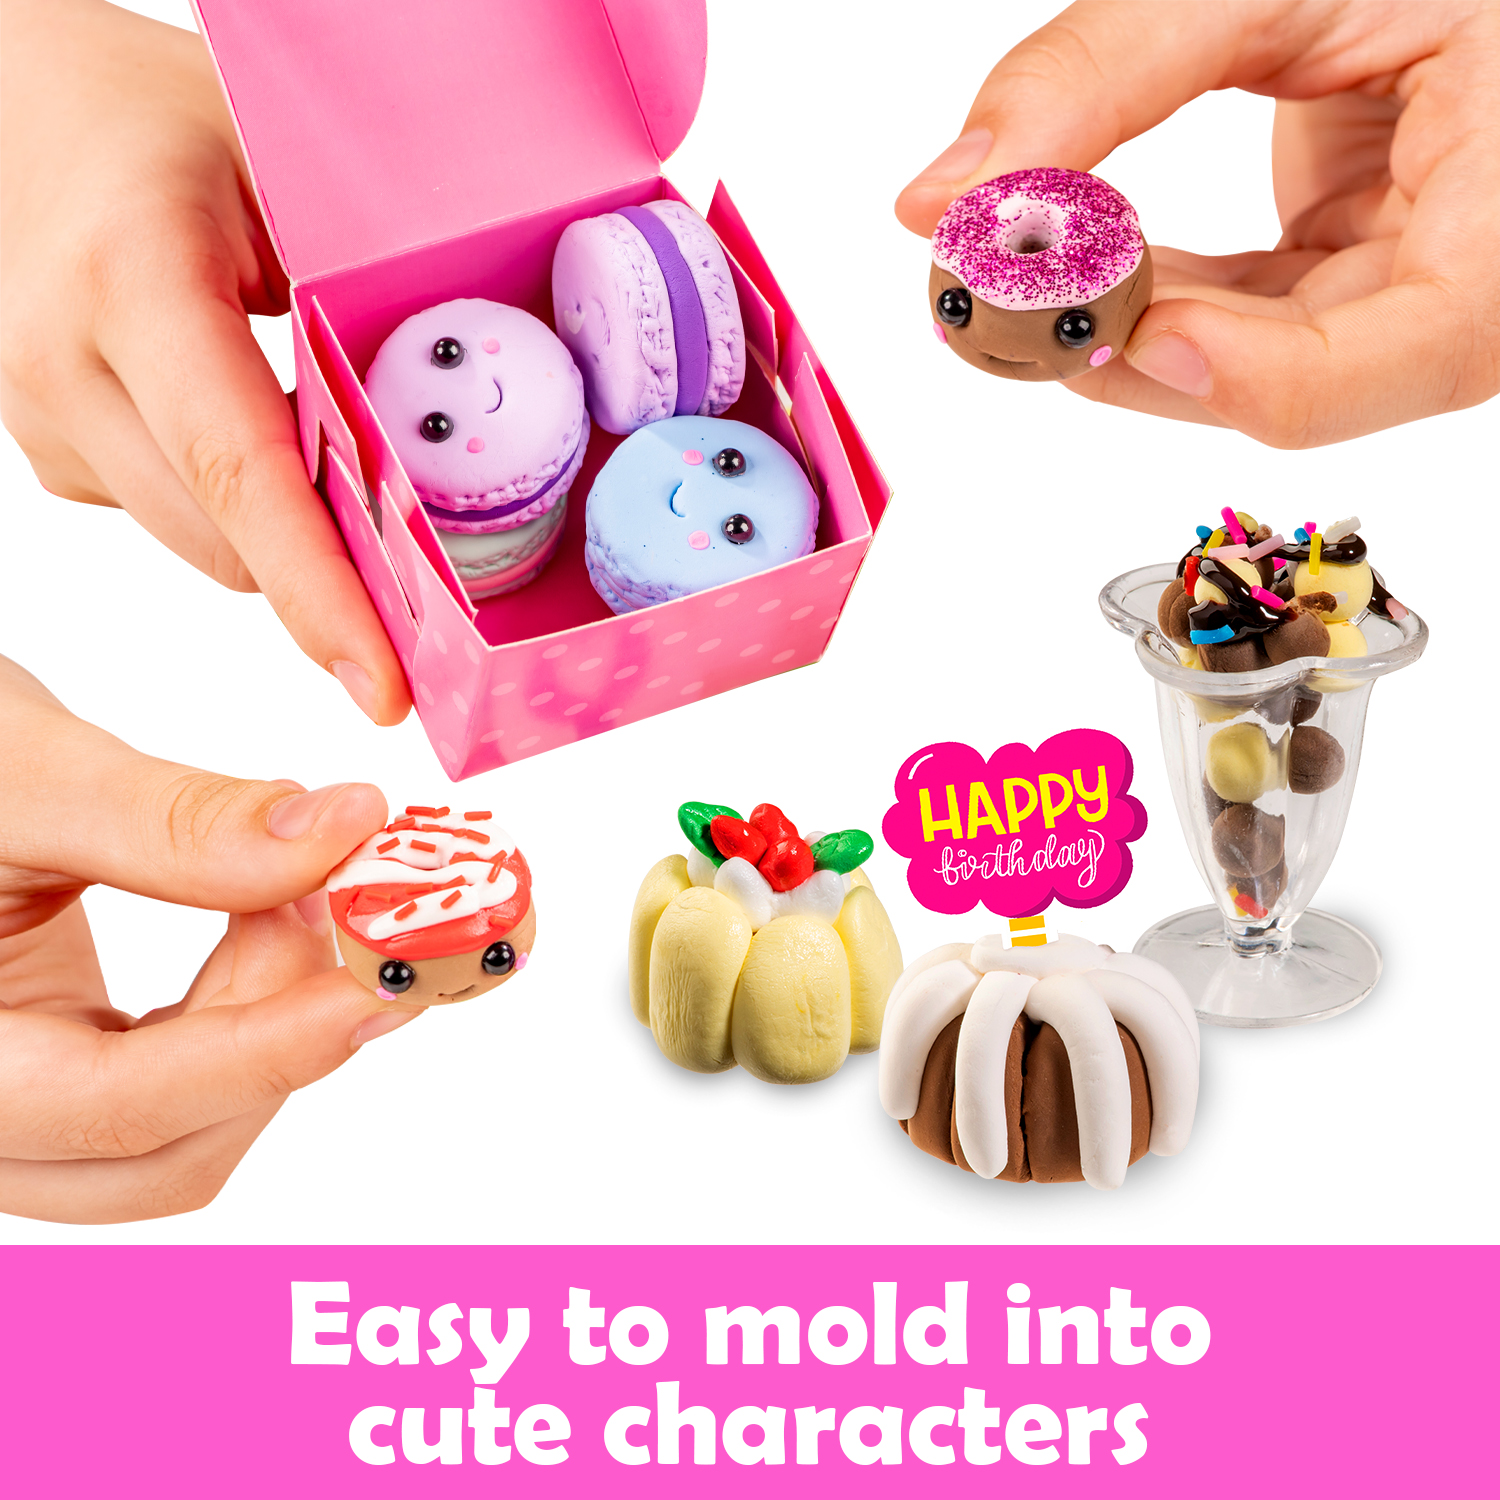 Mini Sweets & Desserts Air Dry Clay Kit – Original Stationery